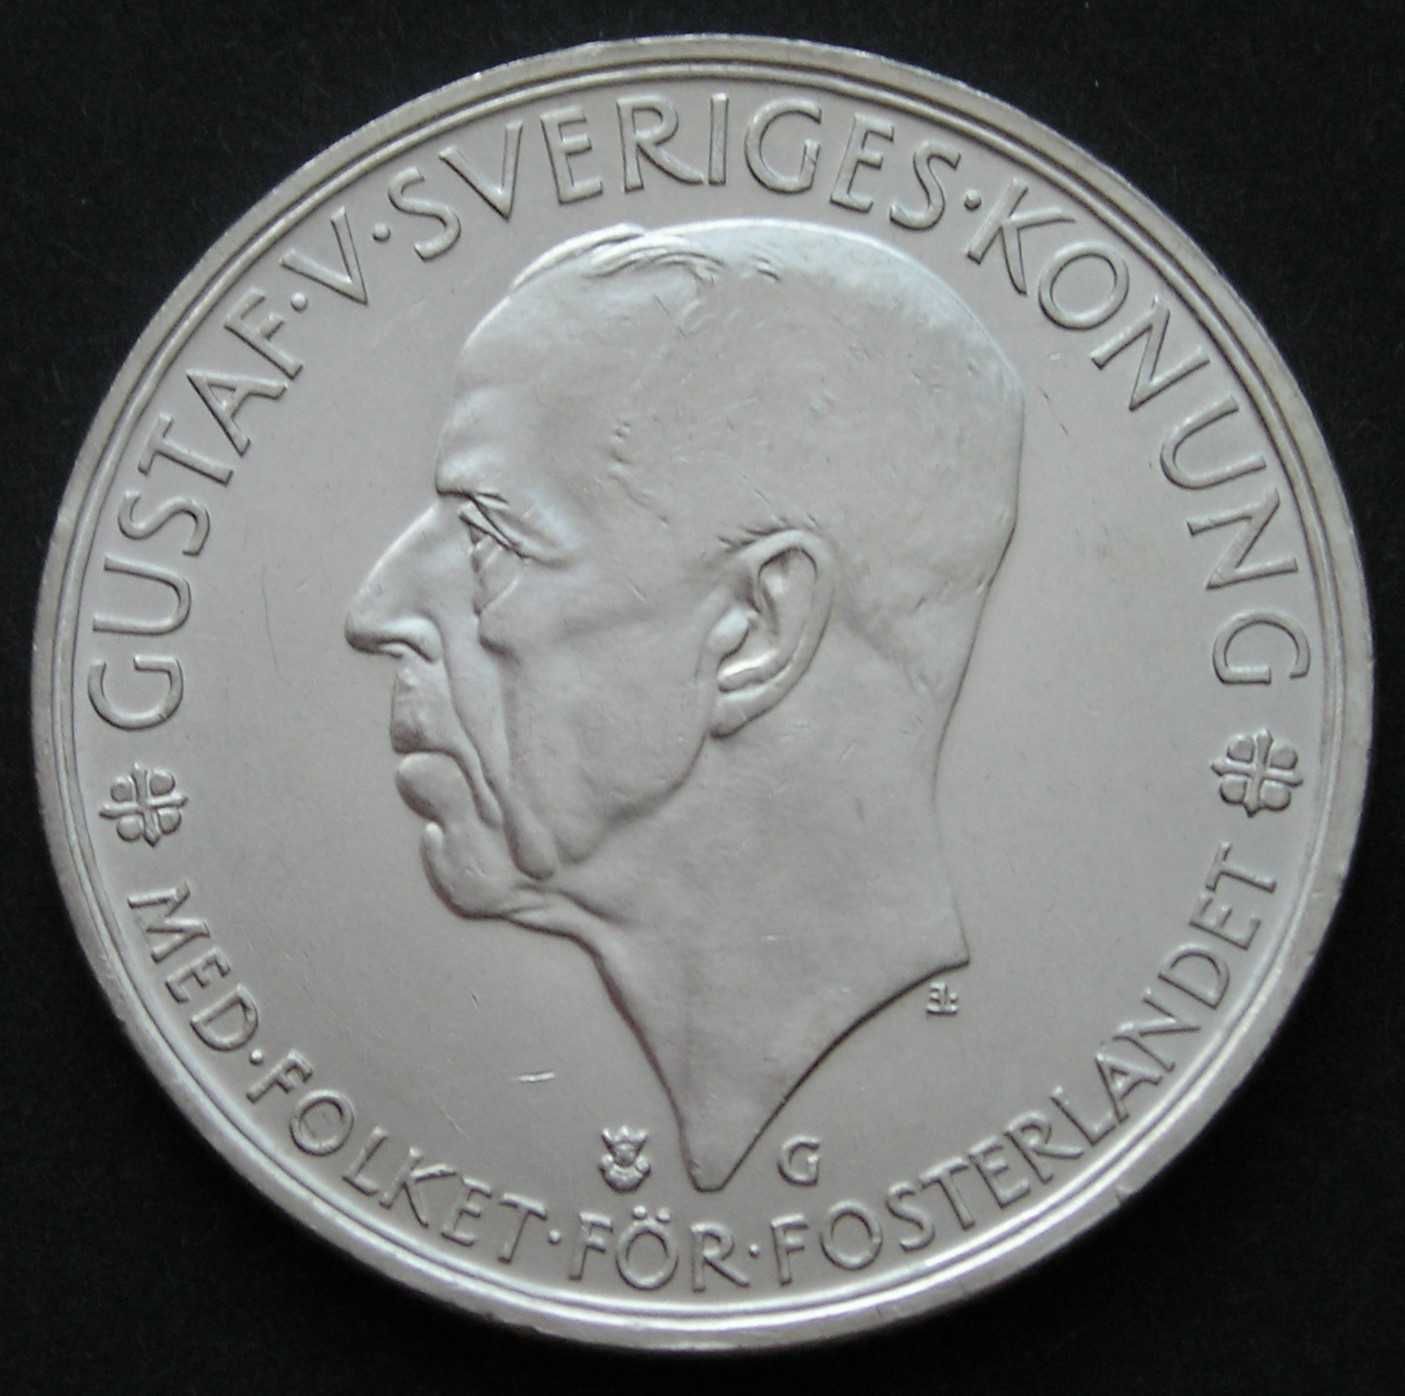 Szwecja 5 koron 1935 - król Gustaw V - Riksdag - srebro